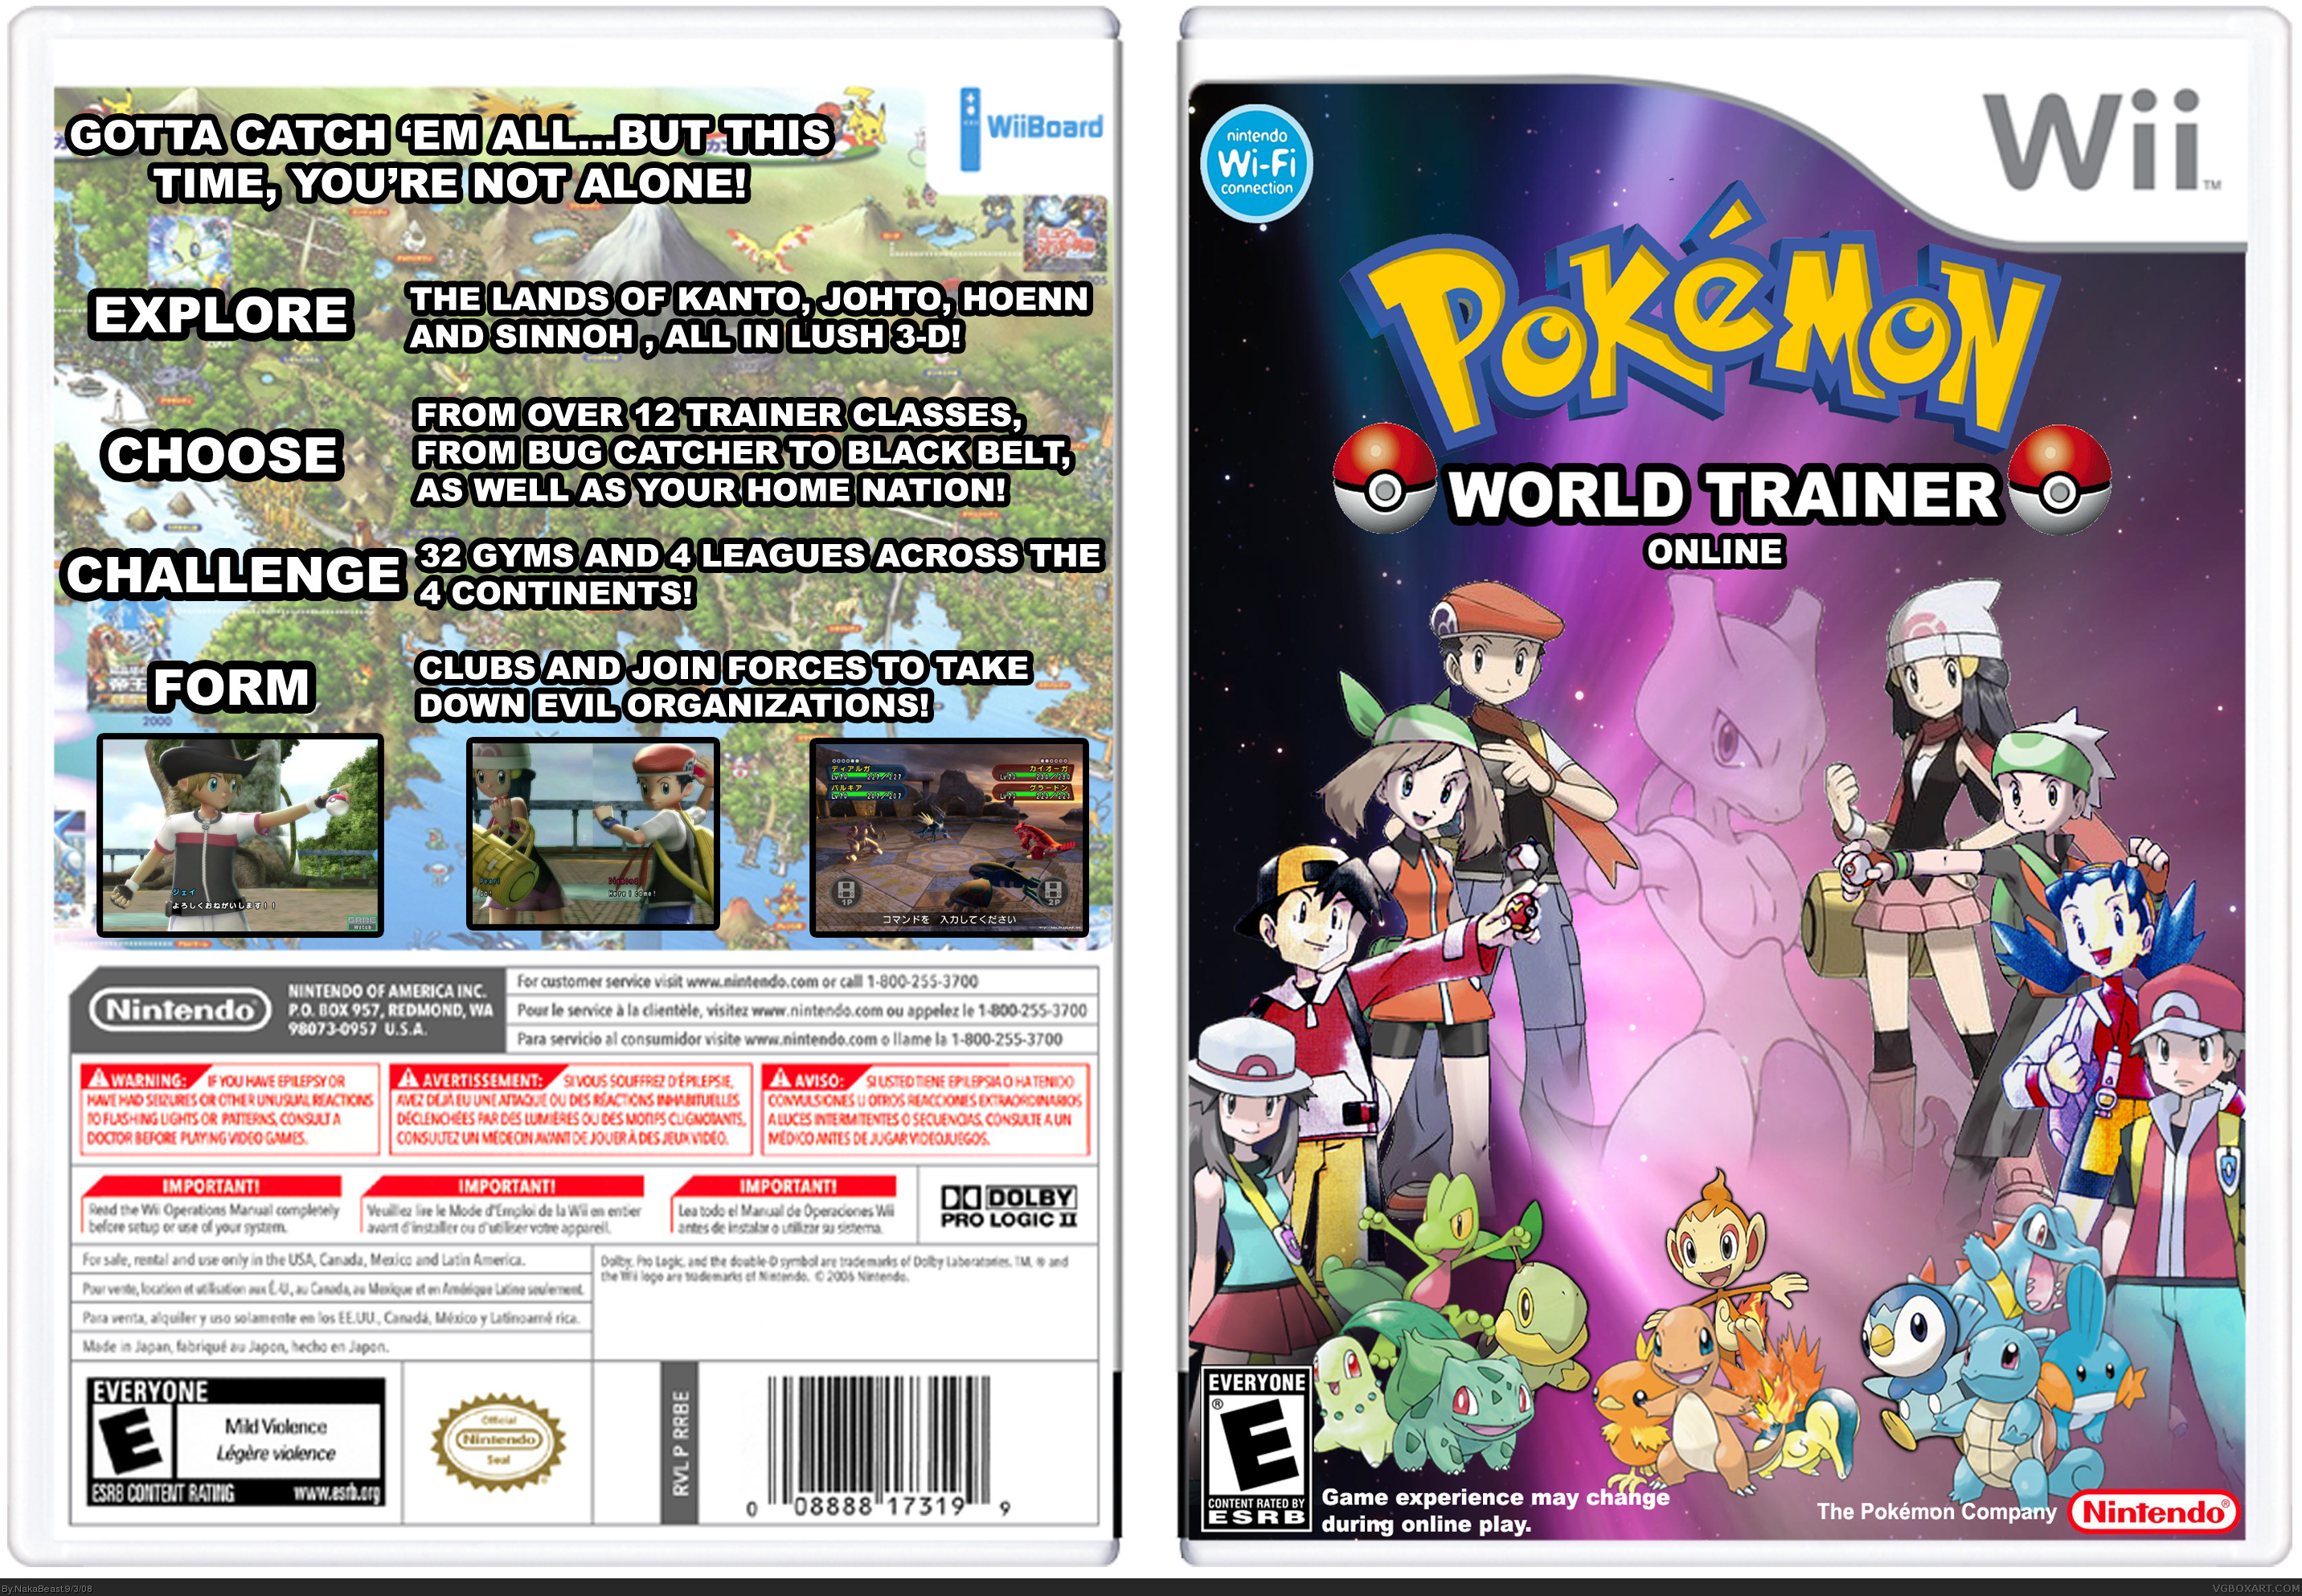 Pokemon: World Trainer Online box cover